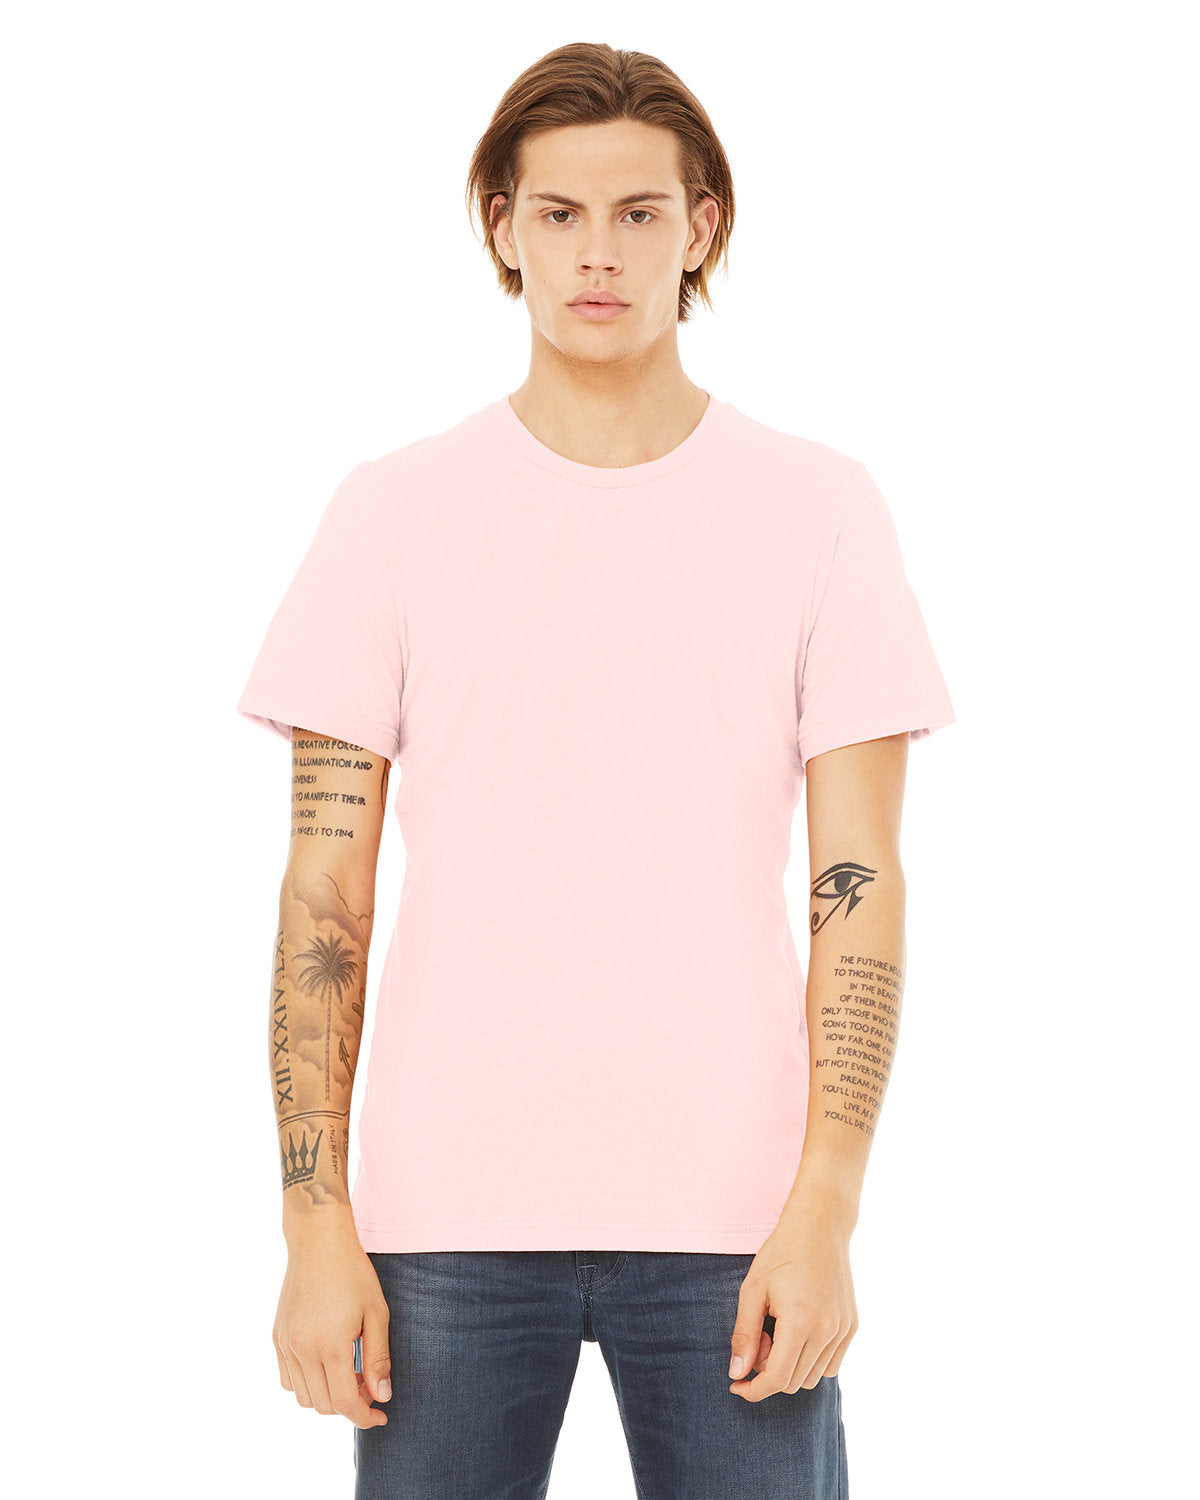 Bella + Canvas 3001C Unisex Jersey T-Shirt – Shirts In Bulk